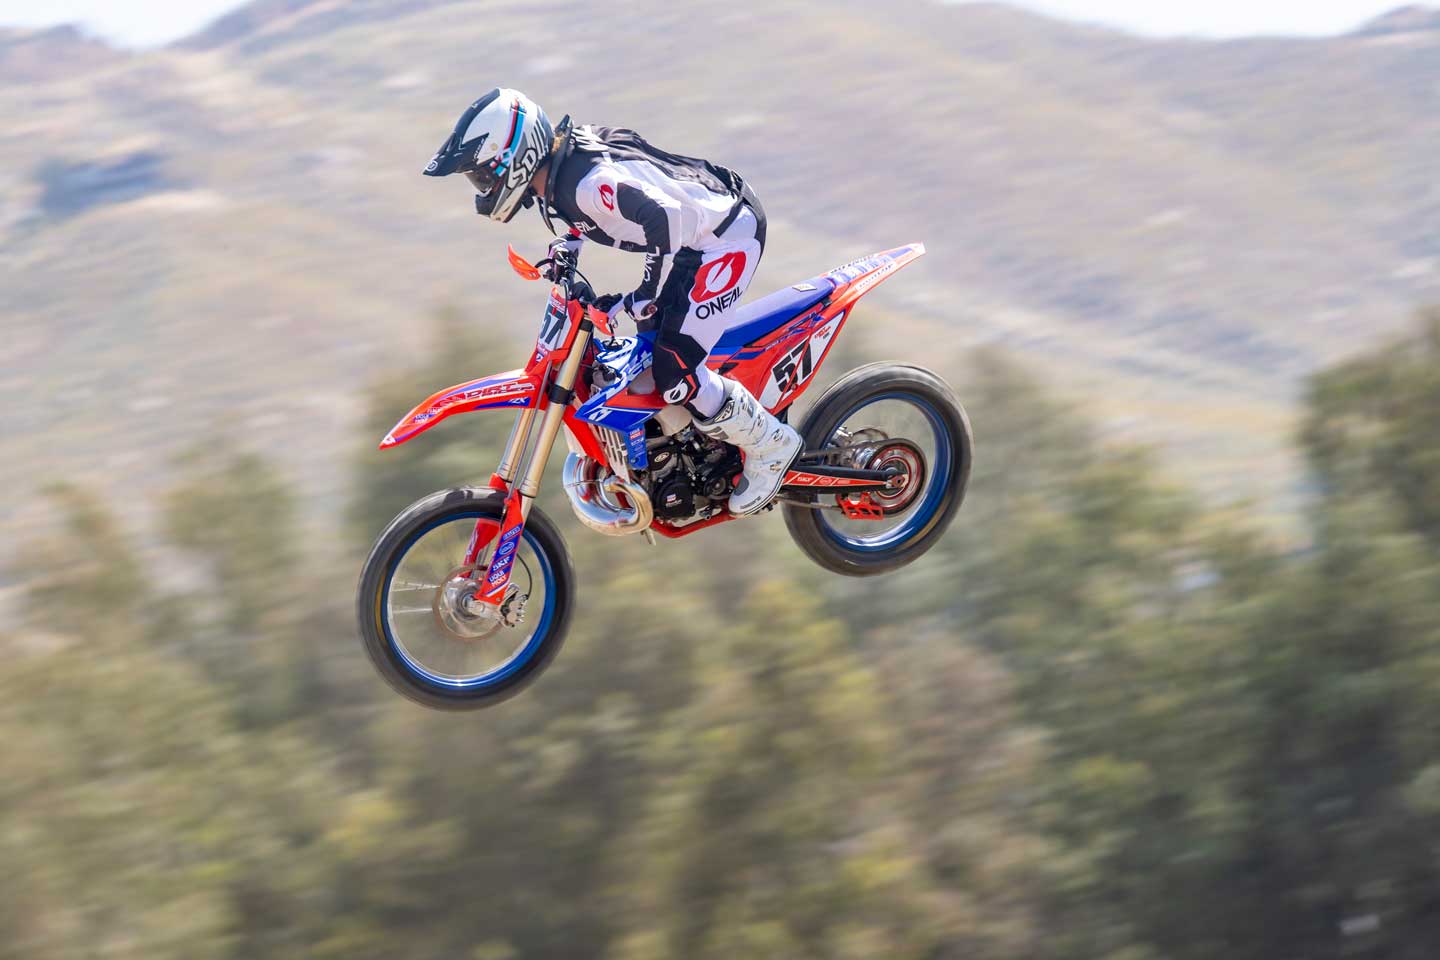 FIRST LOOK! 2024 BETA 450RX MOTOCROSS PROTOTYPE - Motocross Action